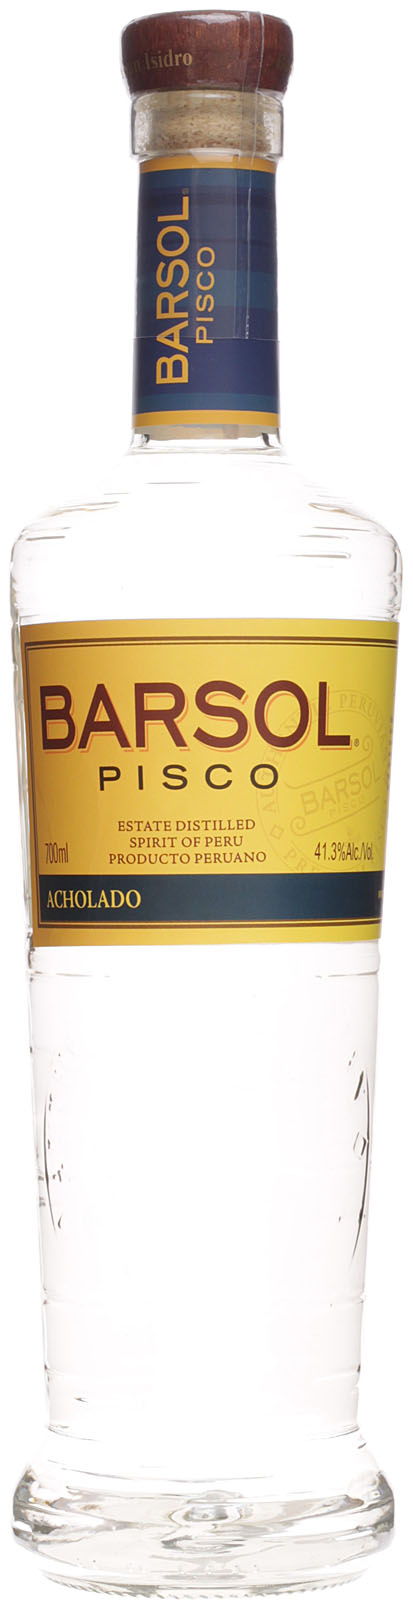 Barsol Pisco Selecto Acholado bei uns im Shop